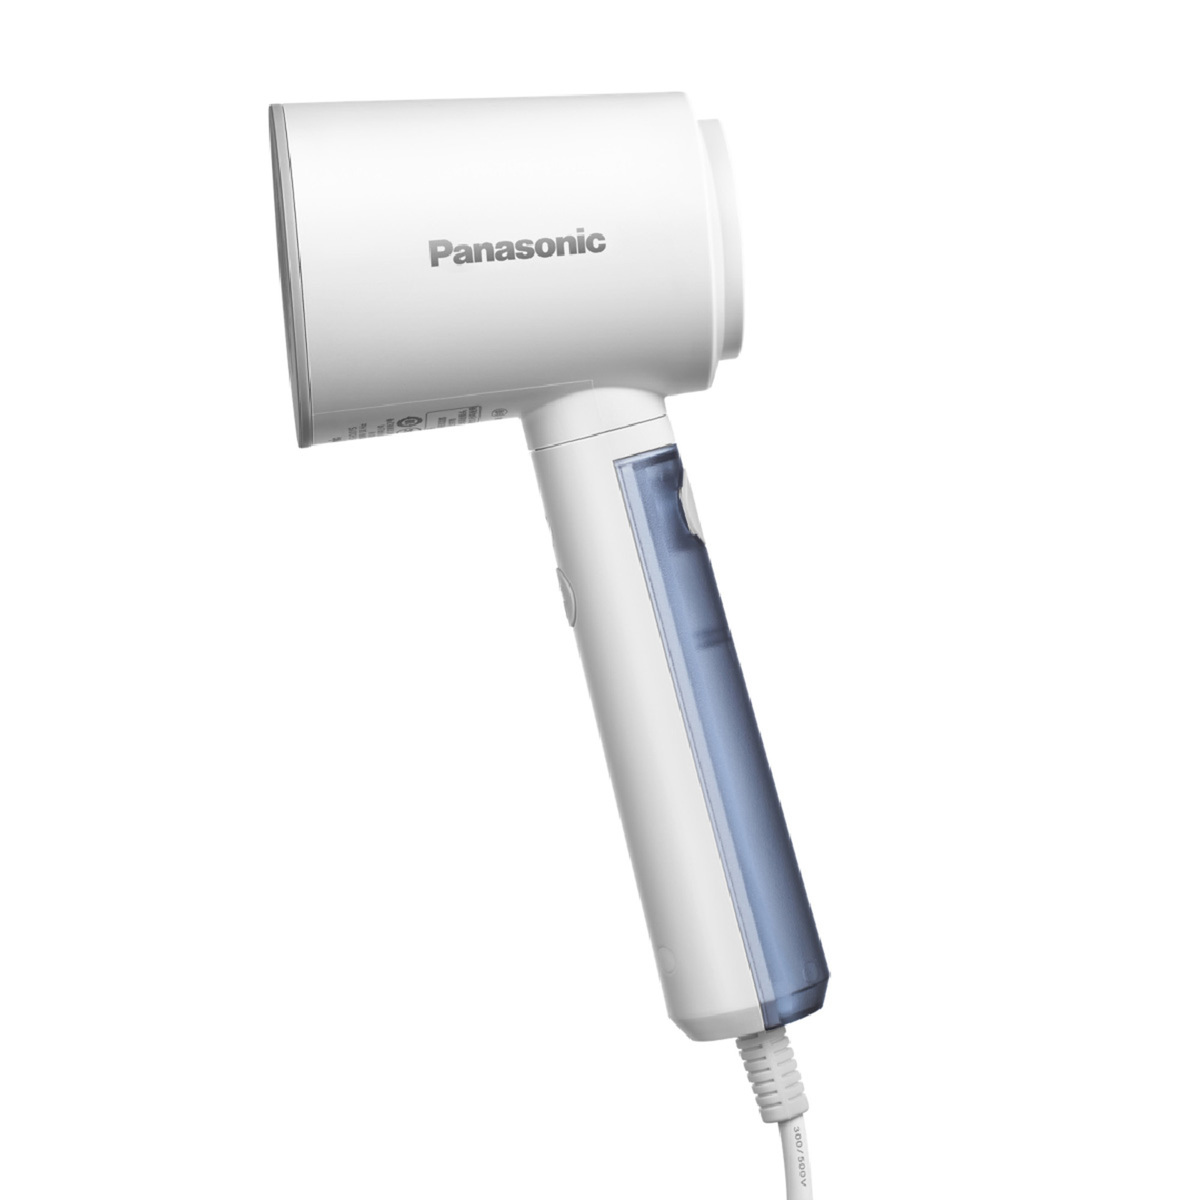 Panasonic Handheld Garment Steamer, White, NI-GHD015